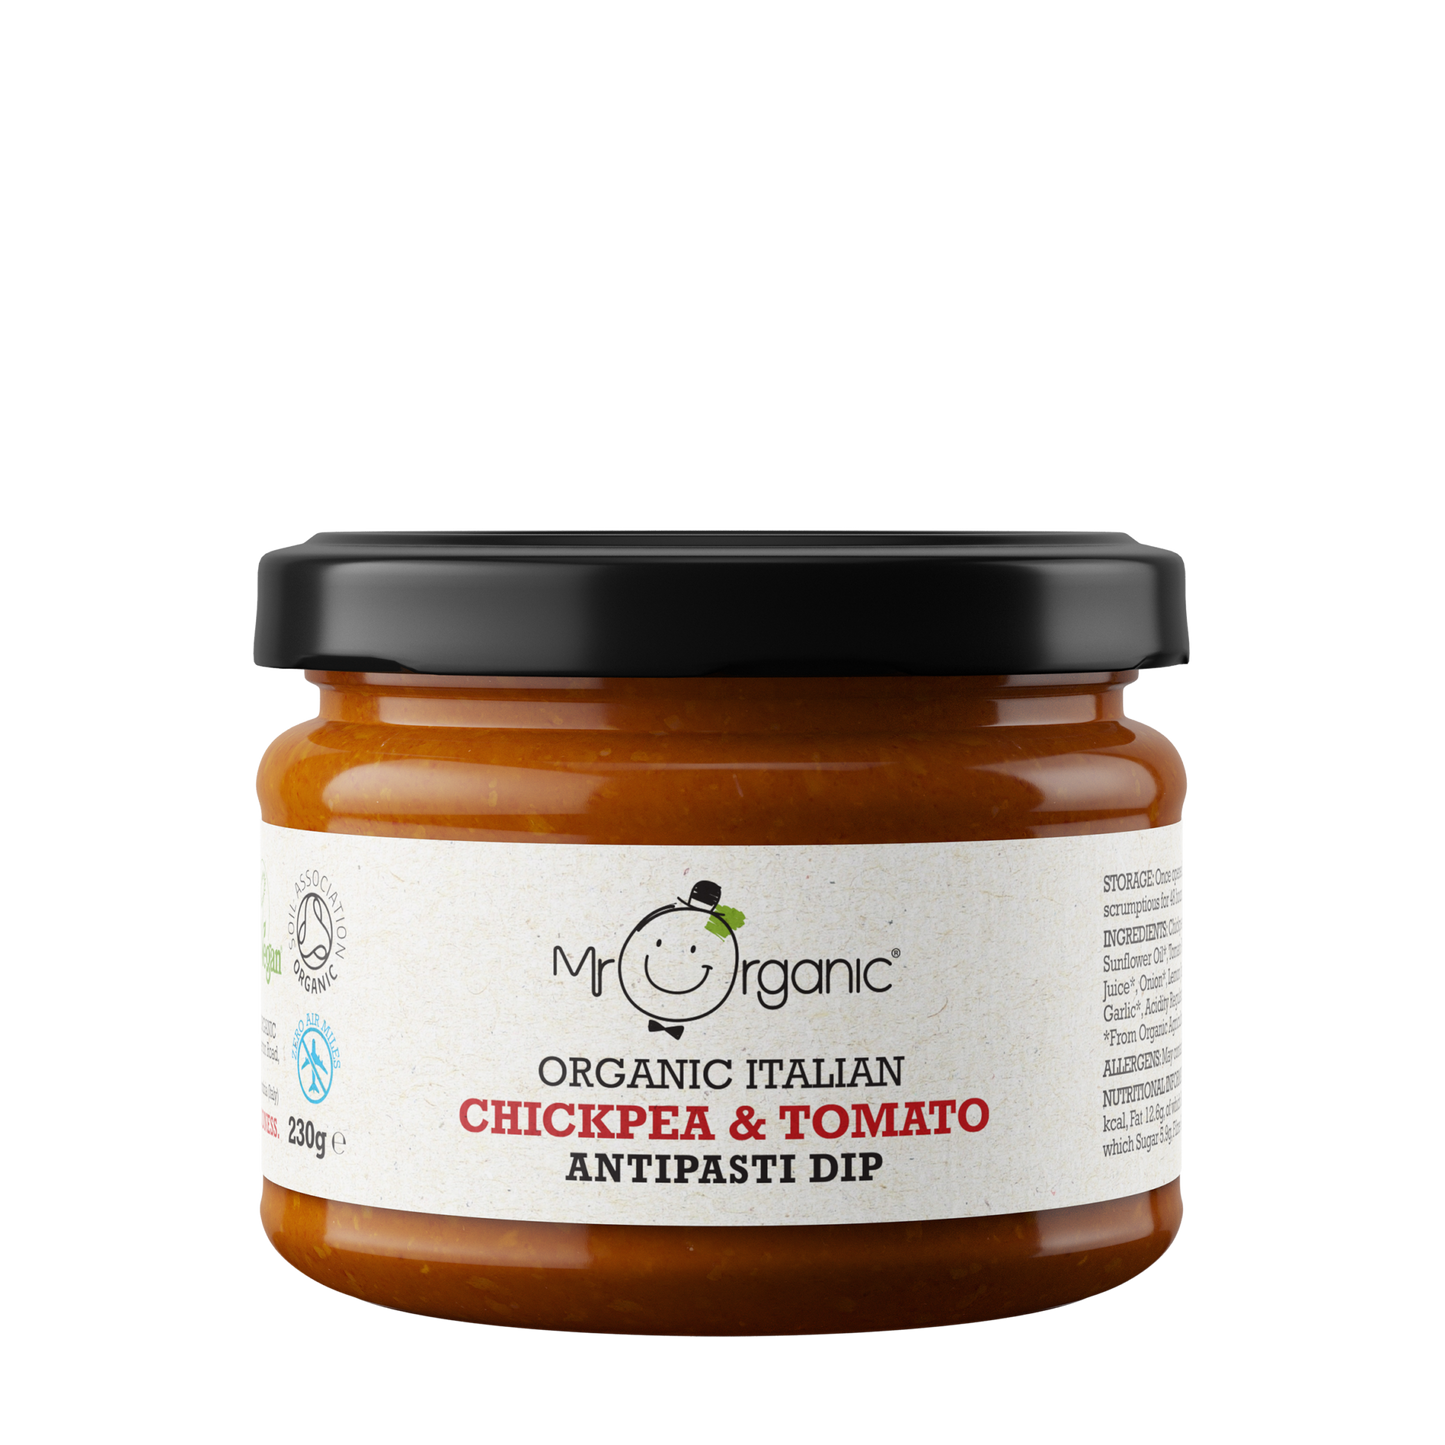 Mr Organic Chickpea & Tomato Antipasti Dip - 230G